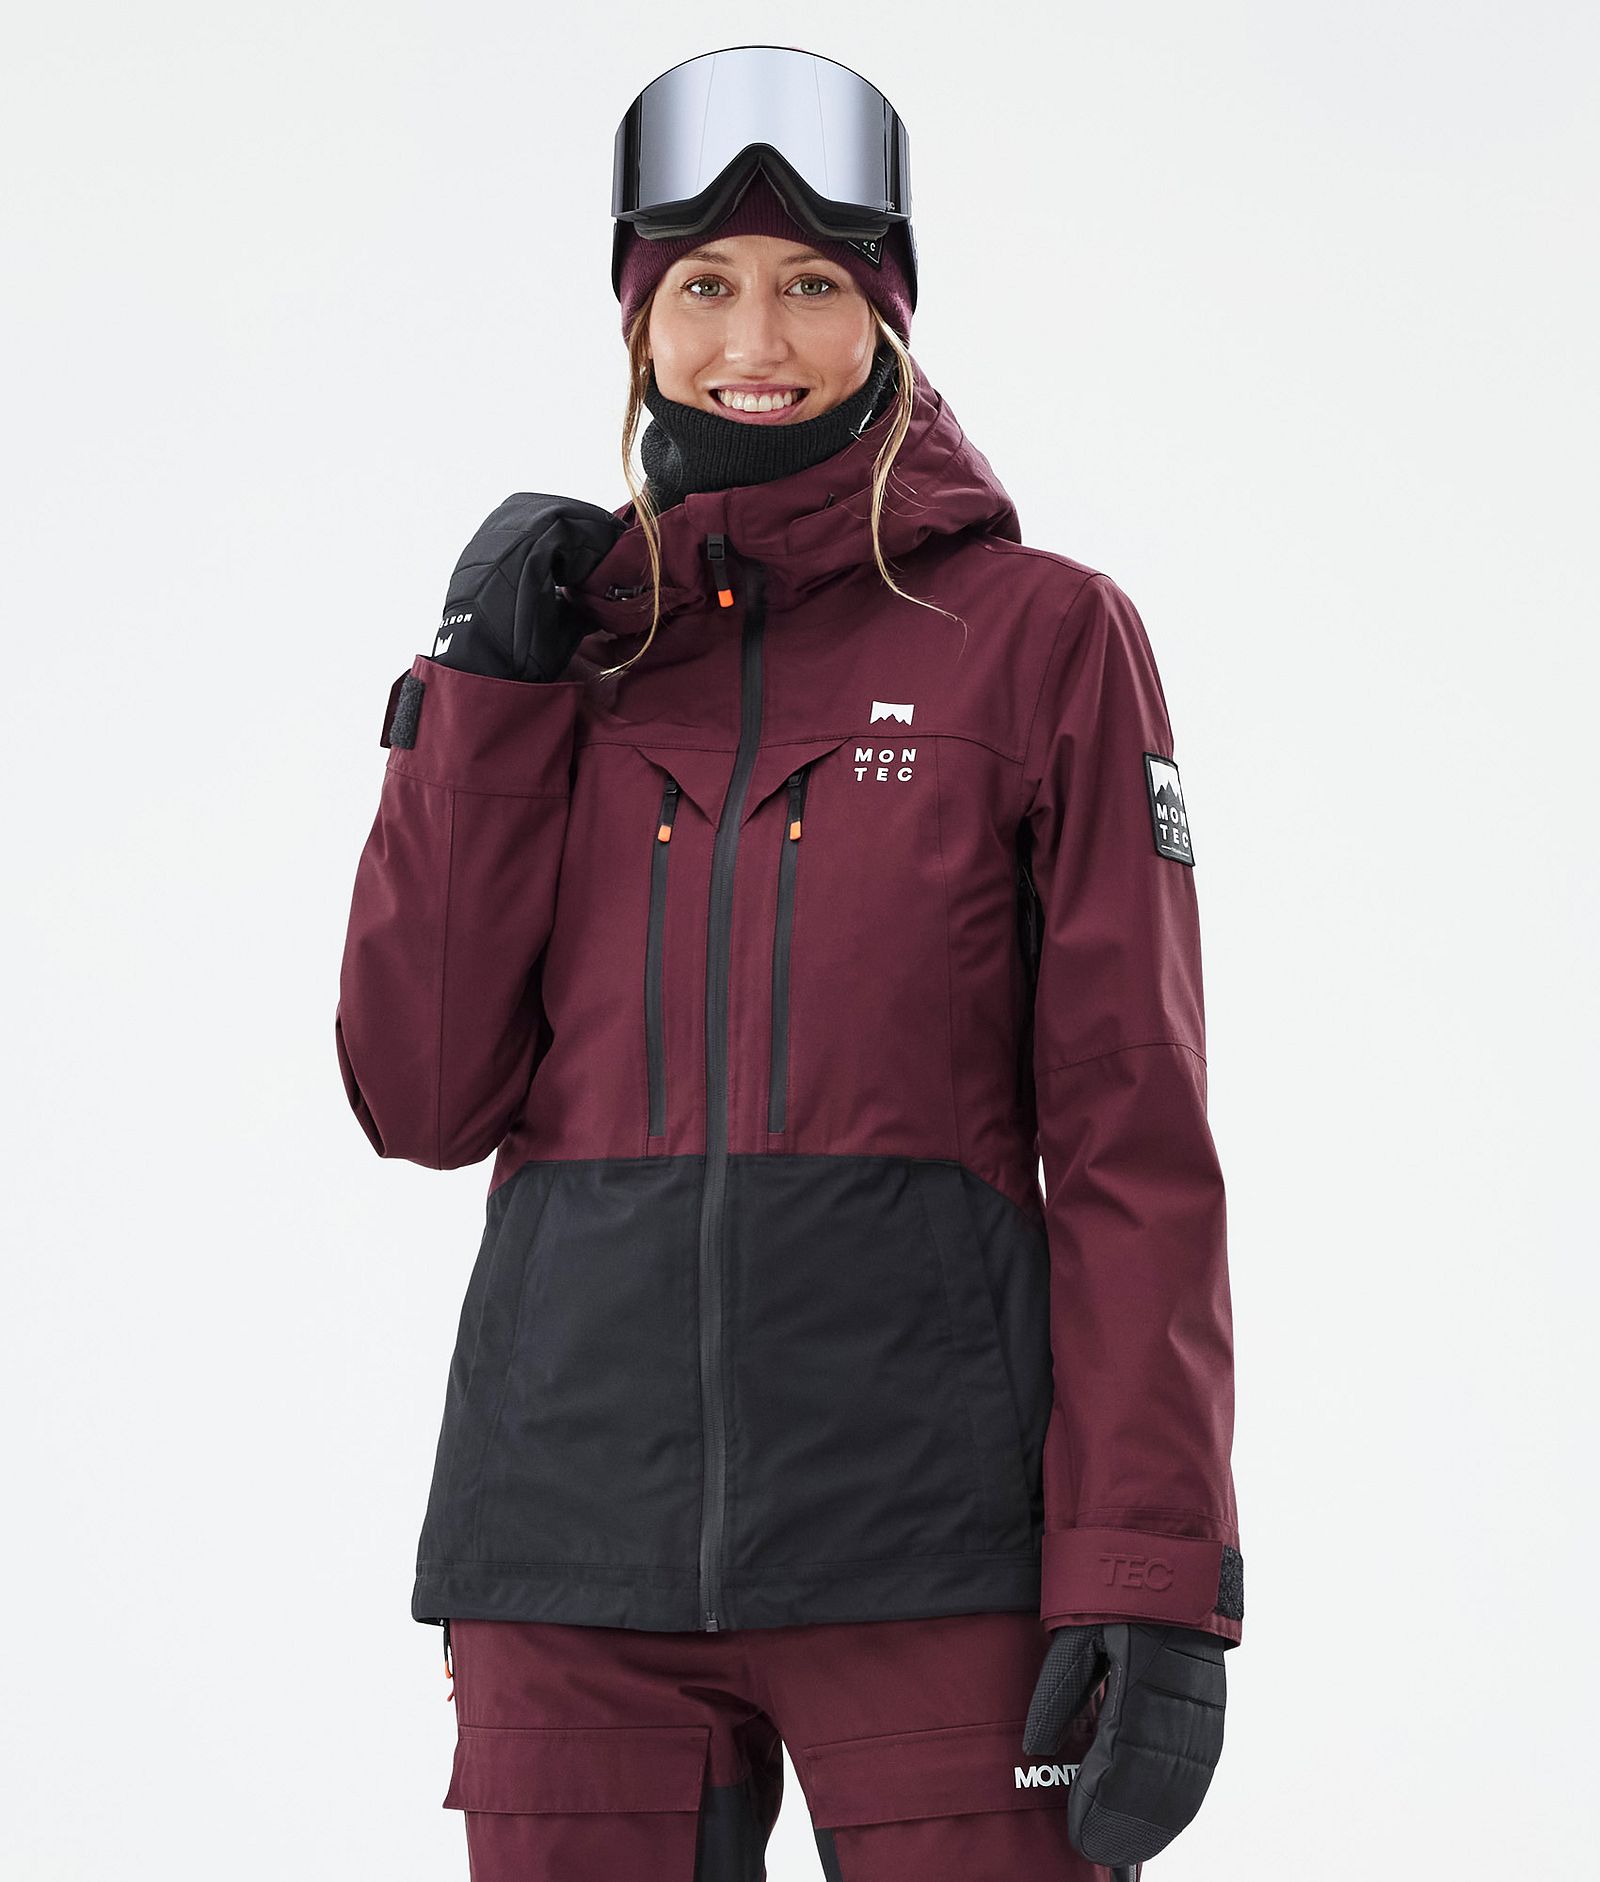 Moss W Ski Jacket Women Burgundy/Black, Image 1 of 10